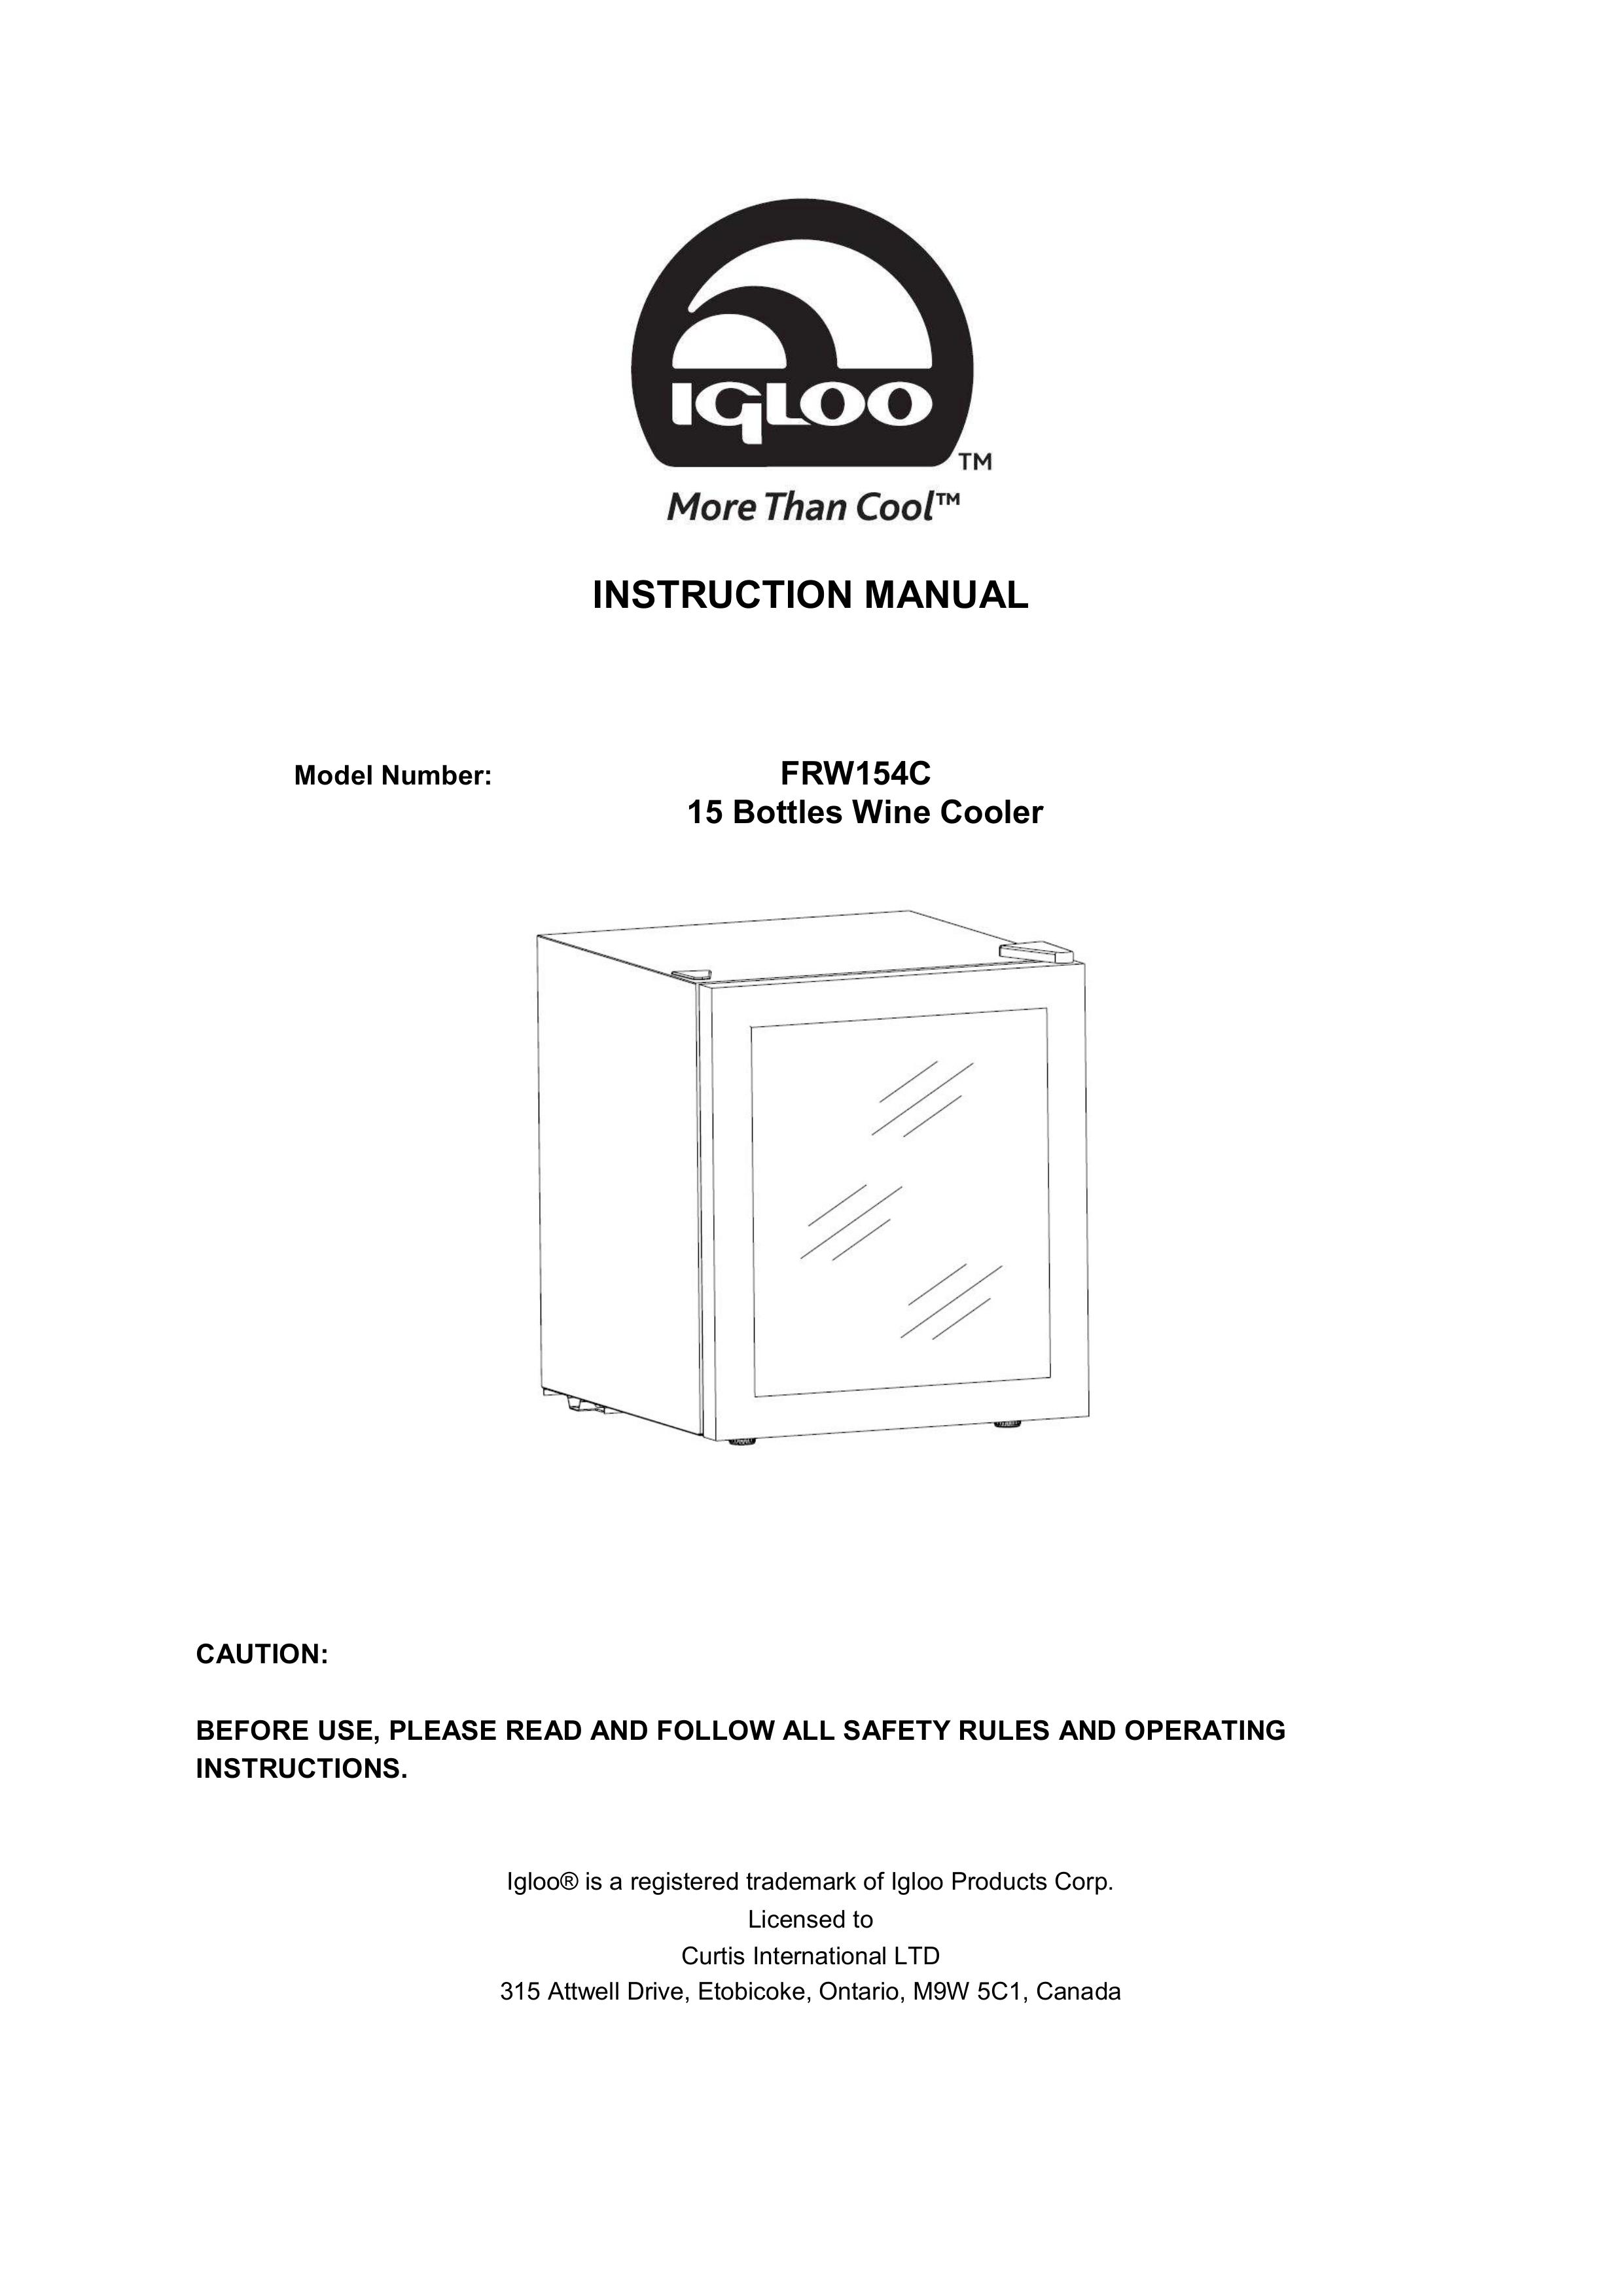 Igloo FRW154C Refrigerator User Manual